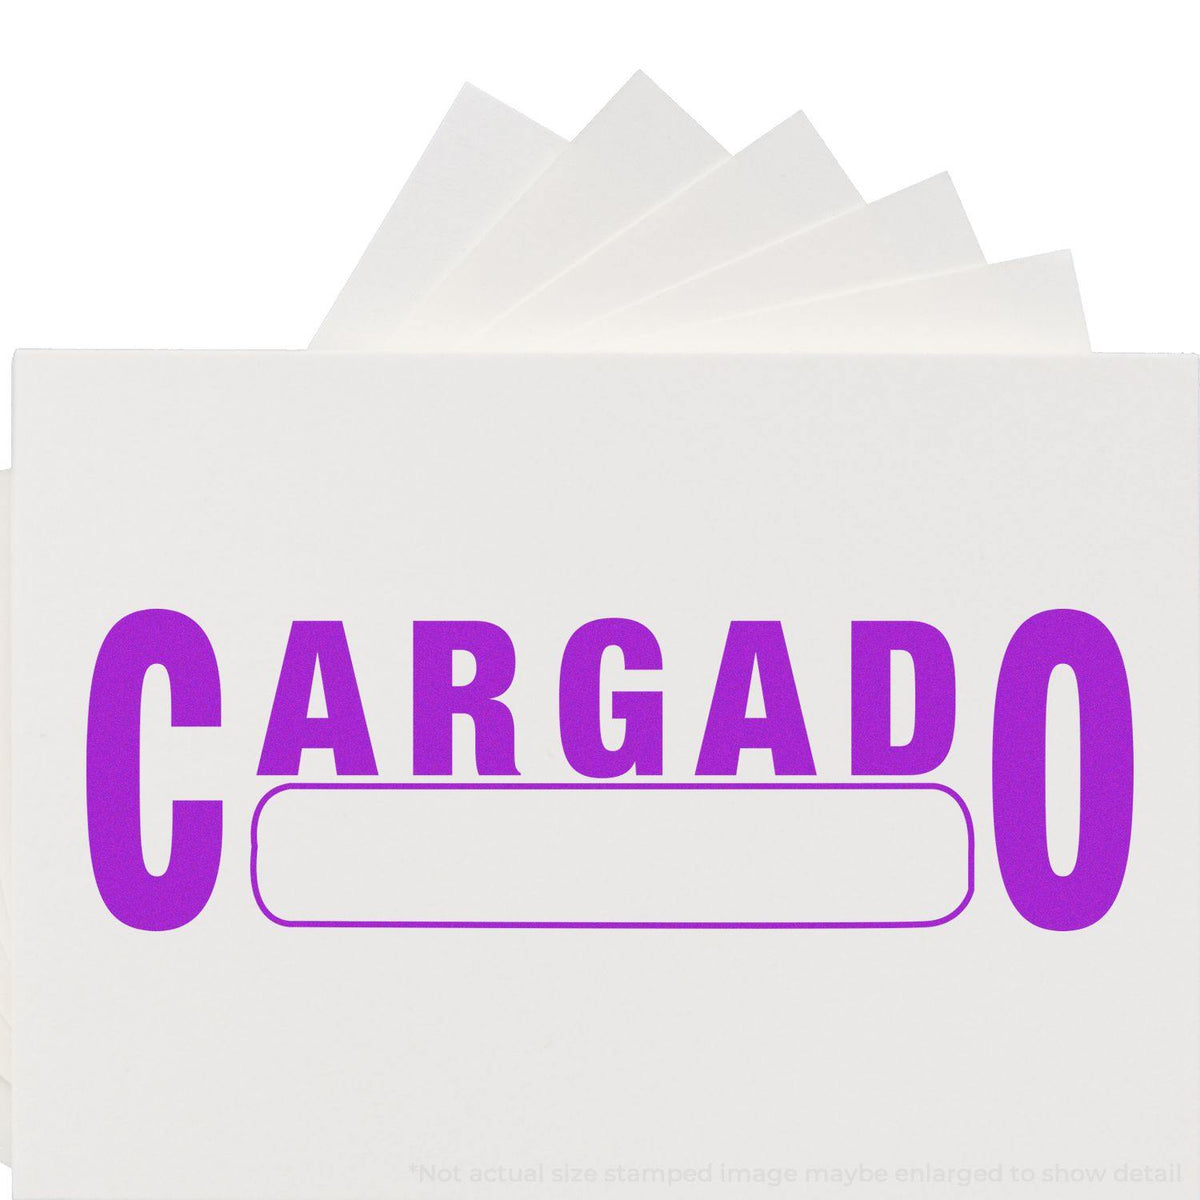 Large Cargado Rubber Stamp Lifestyle Photo